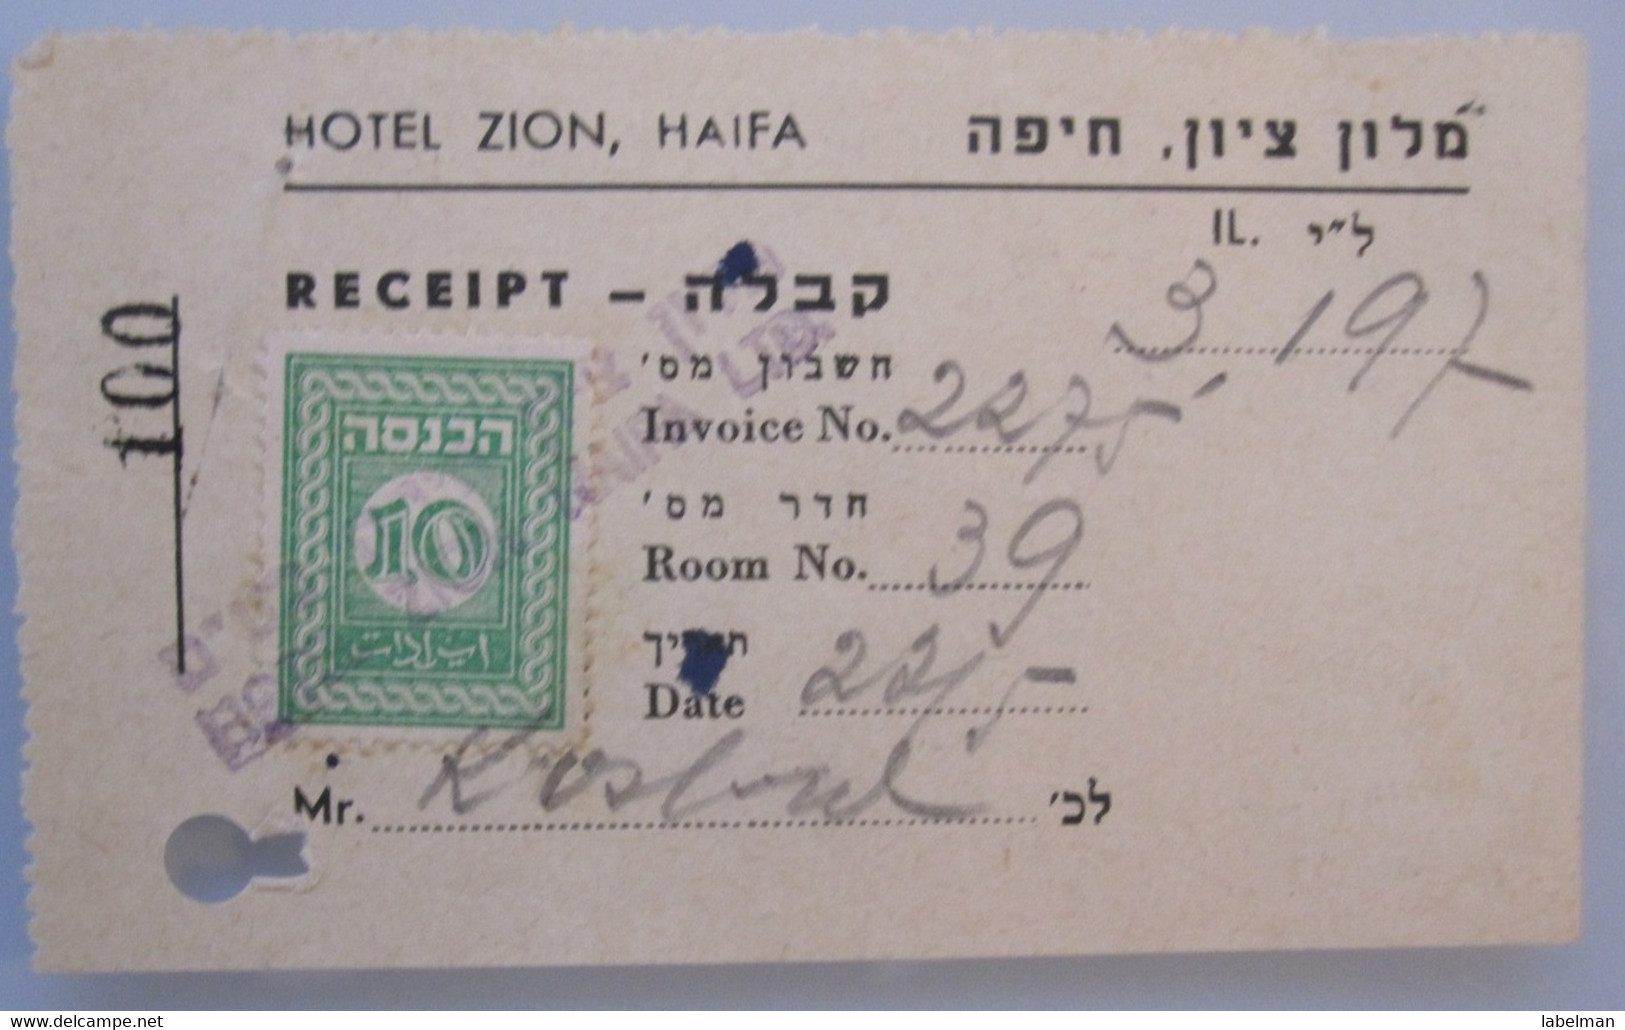 ISRAEL PALESTINE HOTEL PENSION REST HOUSE GUEST HOSTEL INN ZION TAX STAMP CARMEL HAIFA RECEIPT BILL INVOICE VOUCHER - Manuscripts